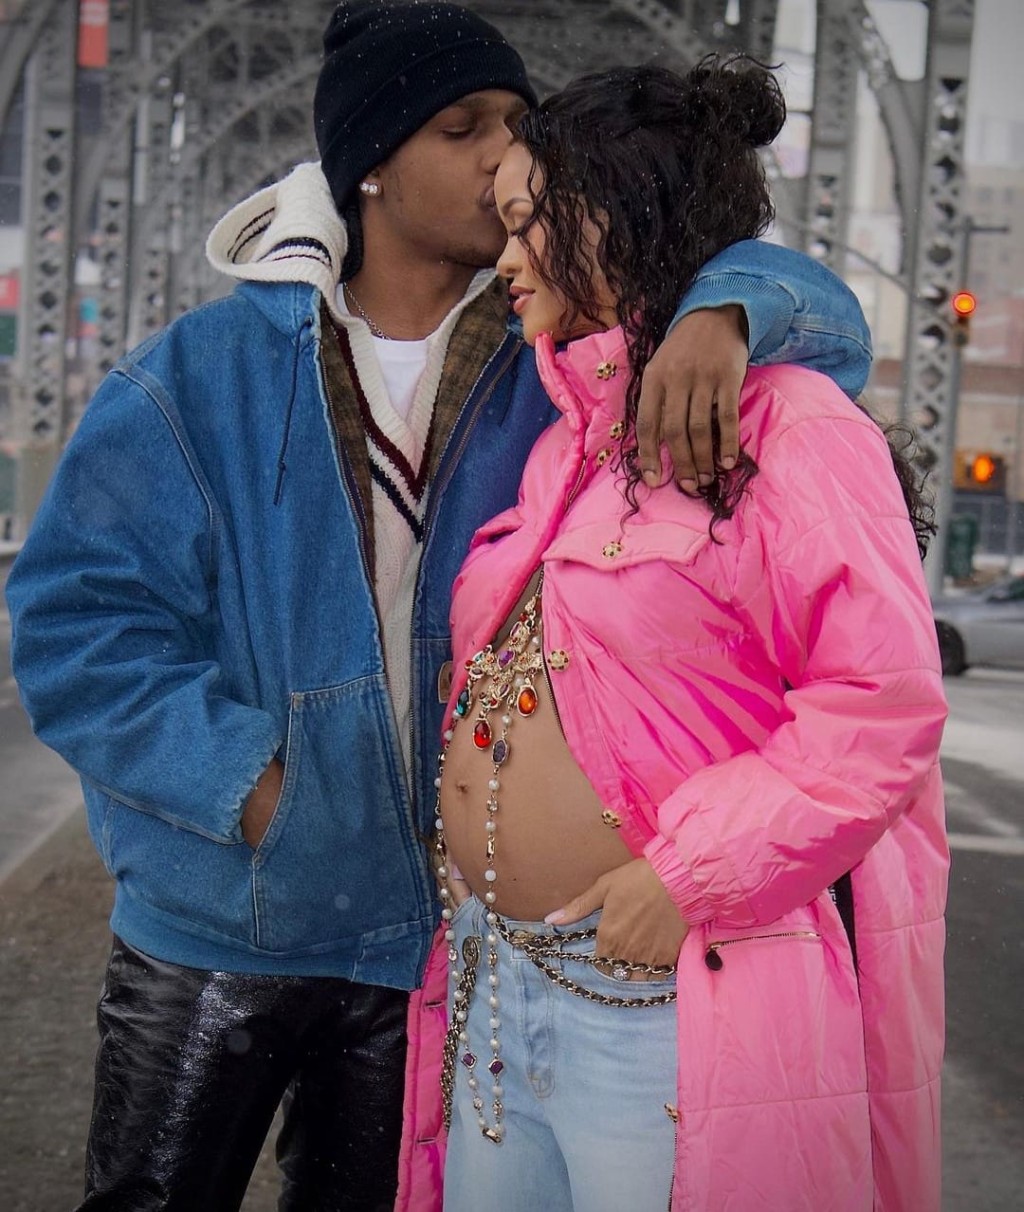 Rihanna與A$AP Rocky被瘋傳因男方出軌而分手，但知情人士指二人感情狀態良好。